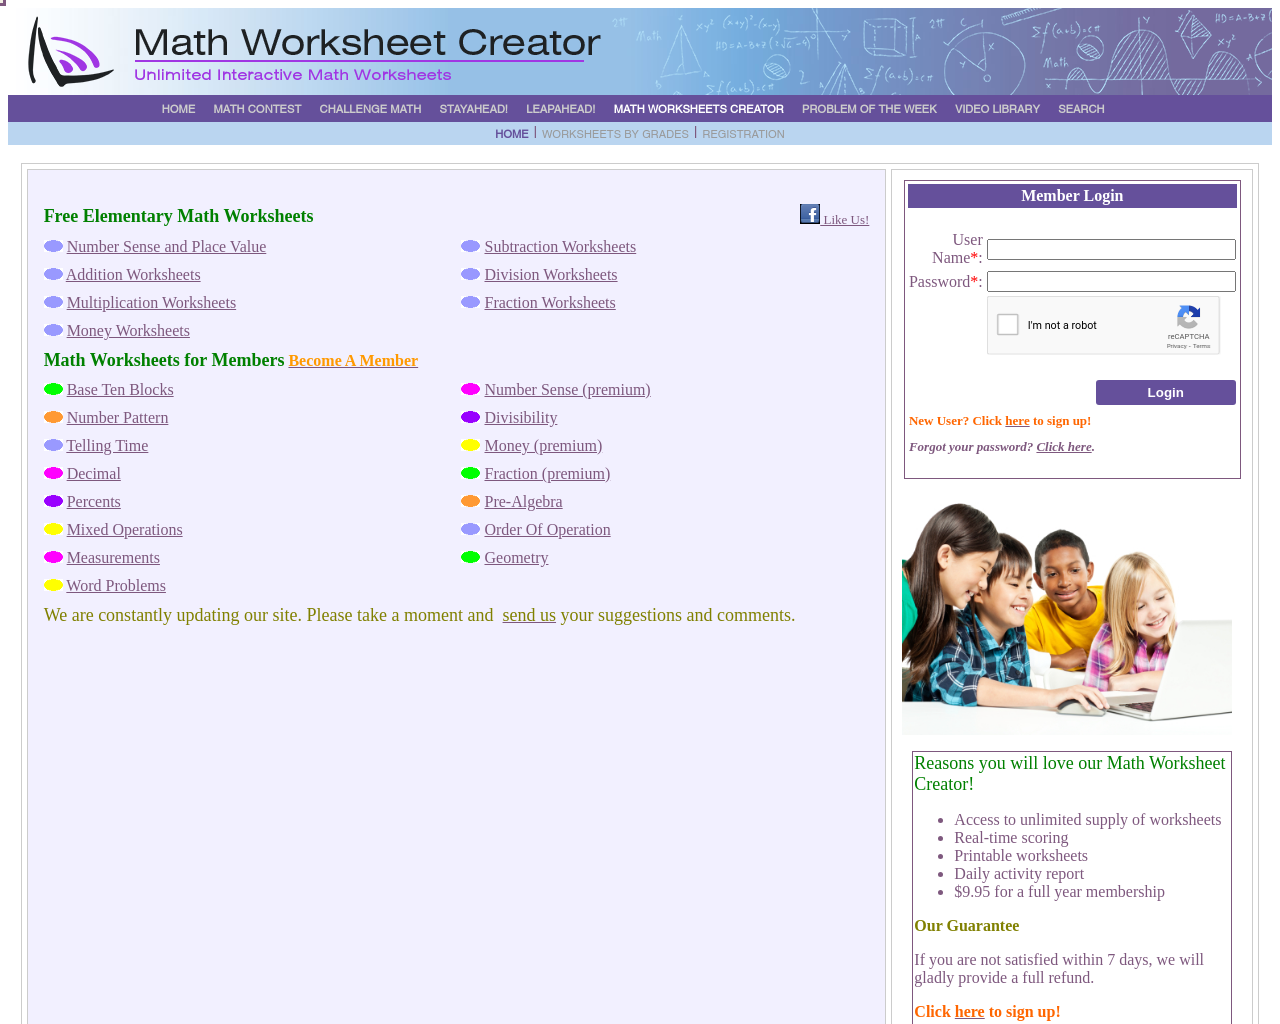 Math Worksheet Creator